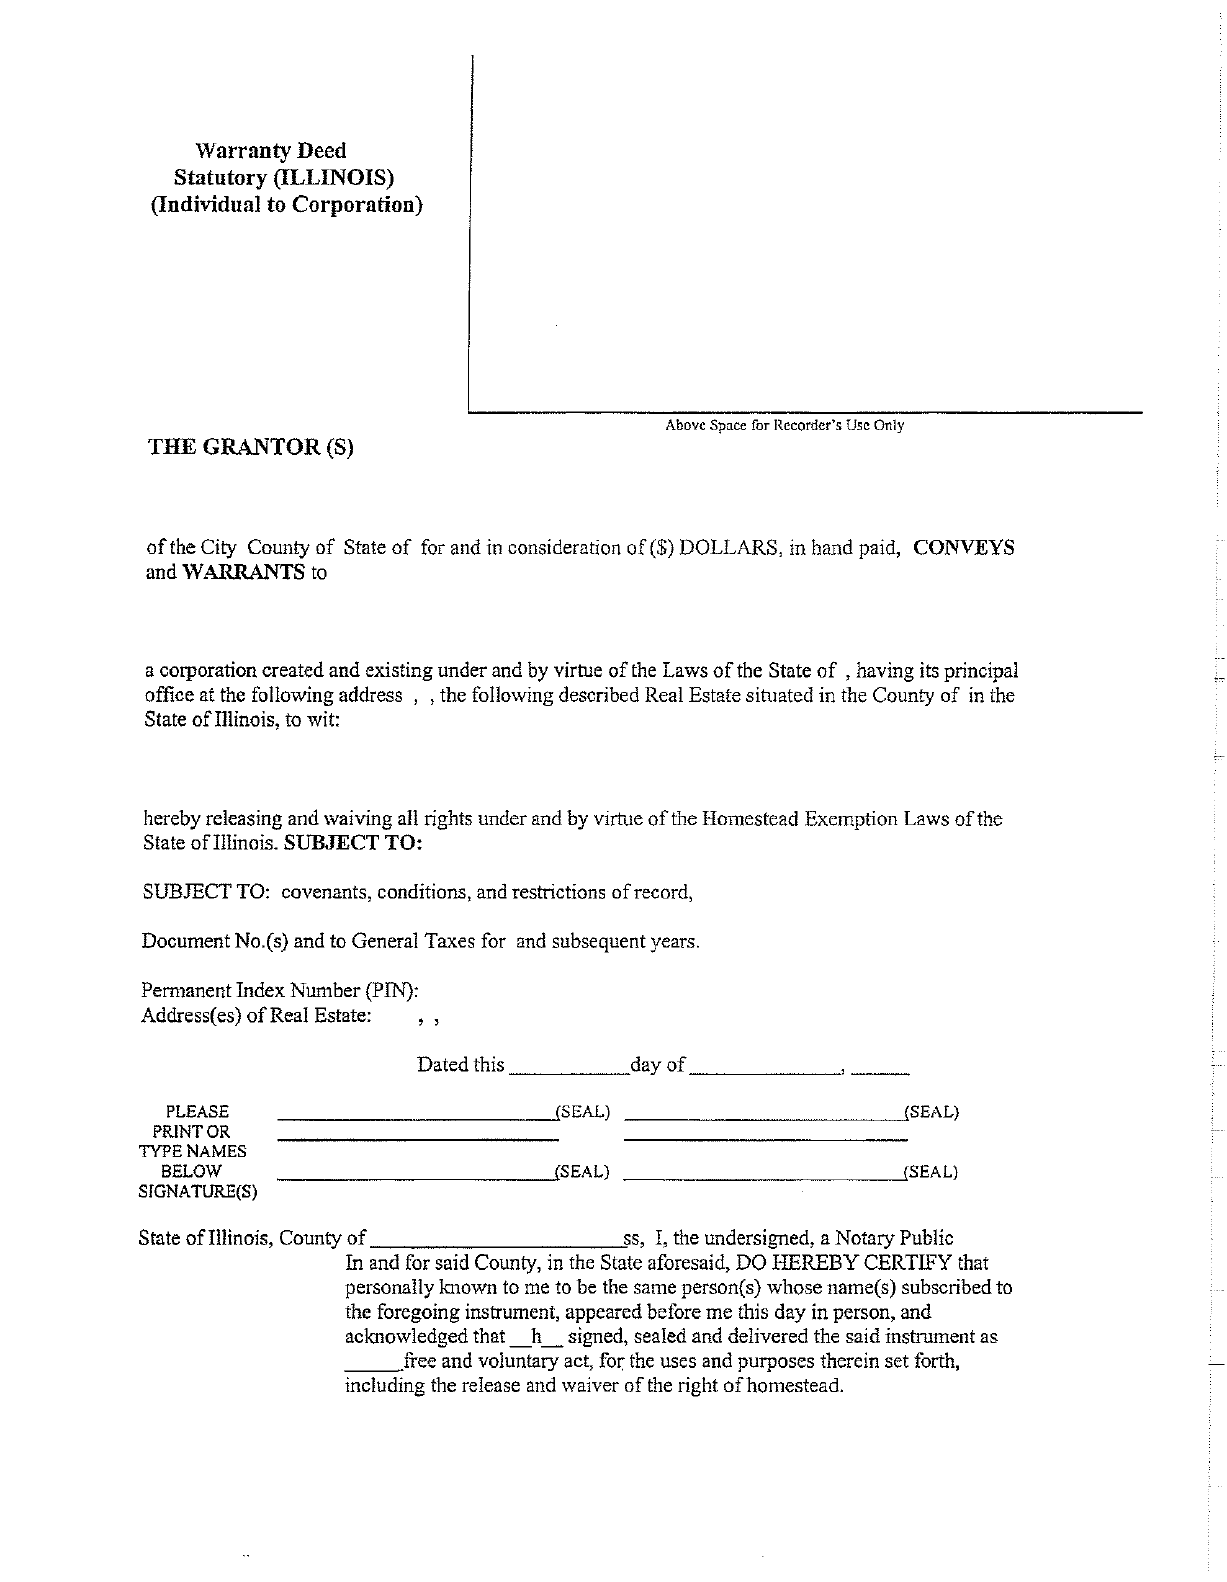 Illinois Warranty Deed Statutory (Individual to Corporation)